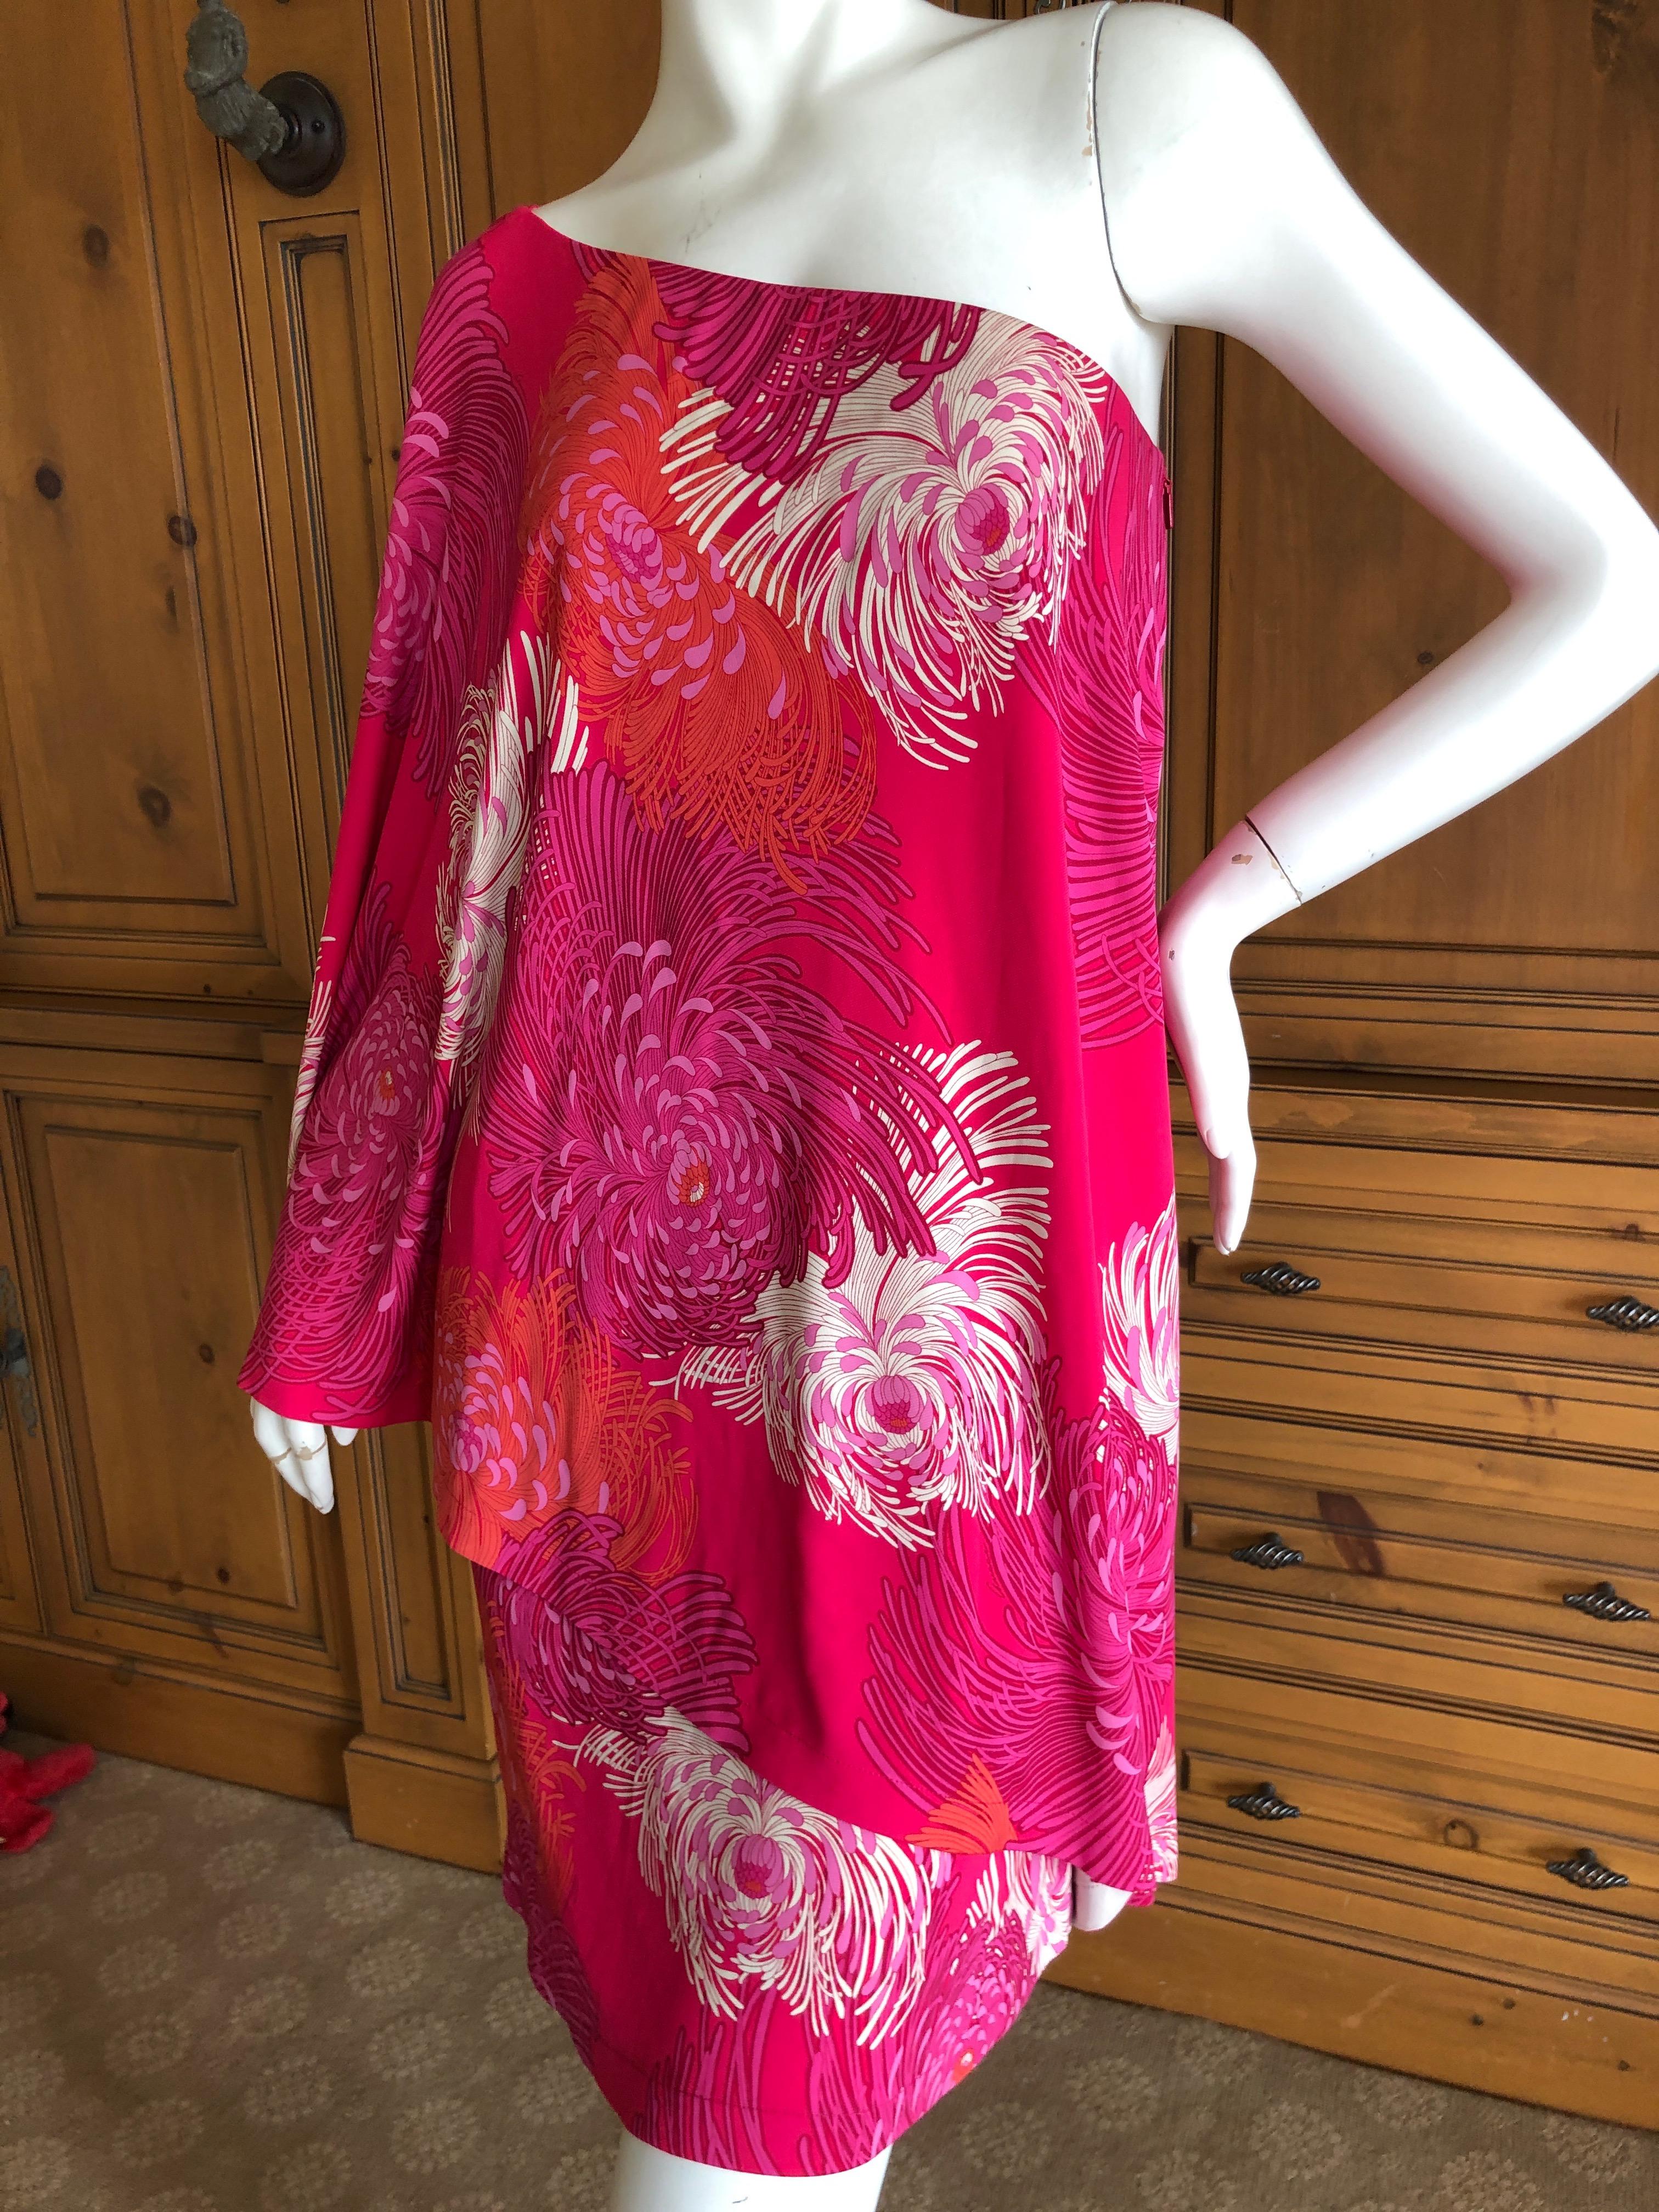 Gucci Chrysanthemum Print One Sleeve Mini Dress .
Size M
Bust 38